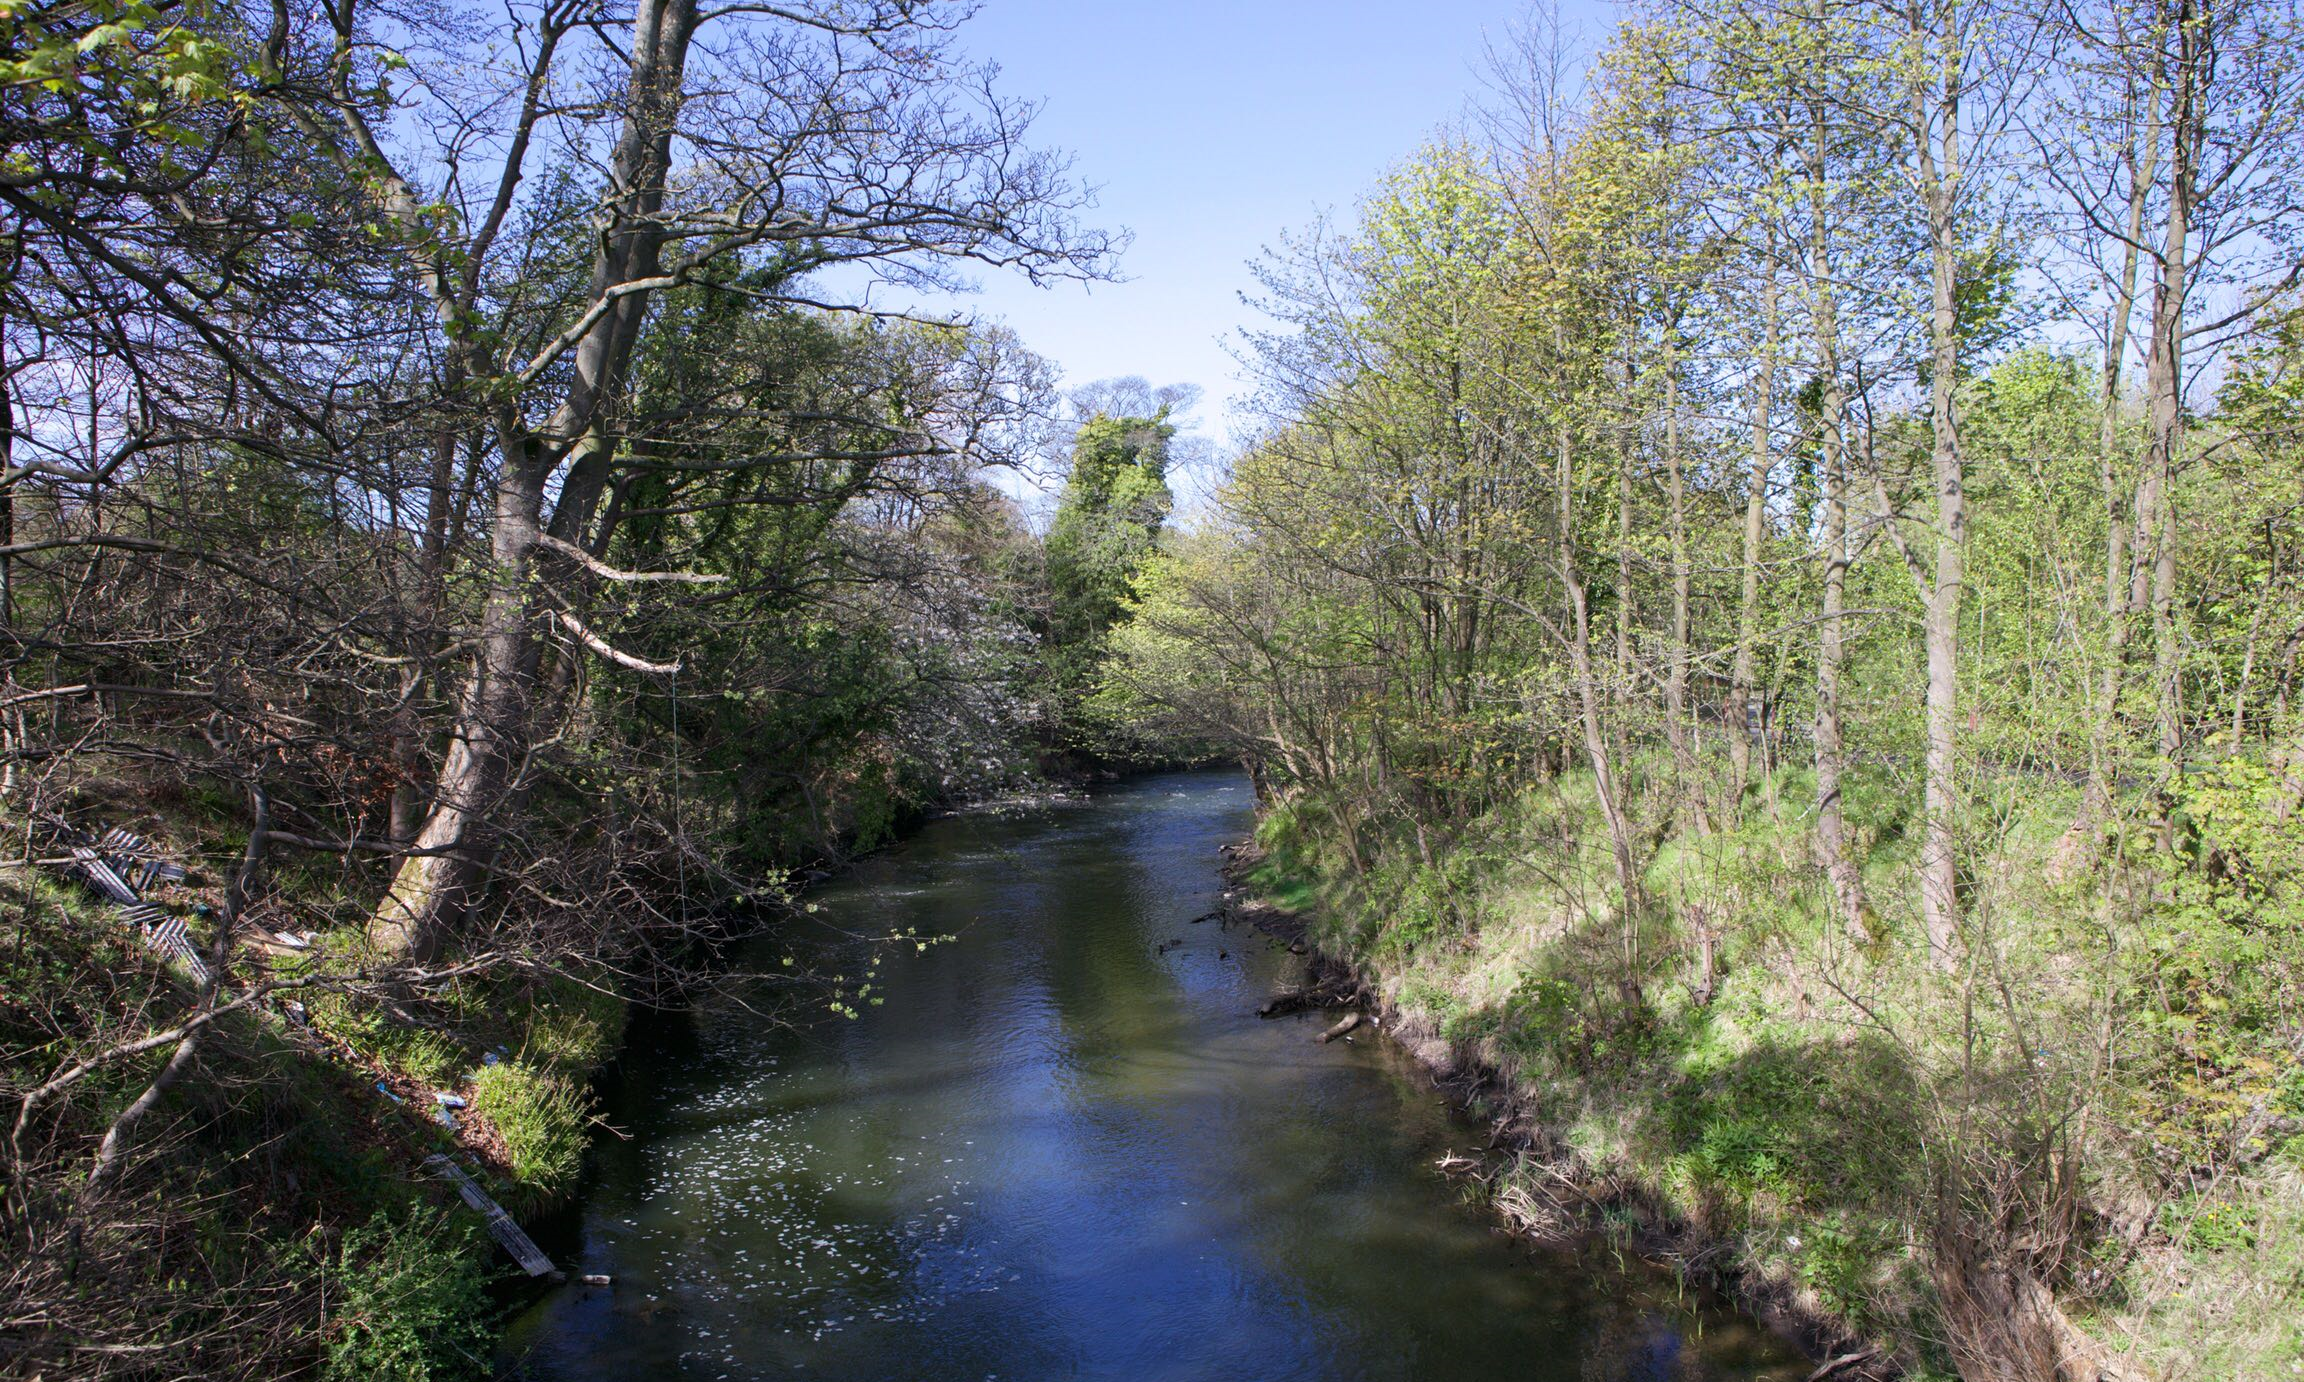 The river Leven